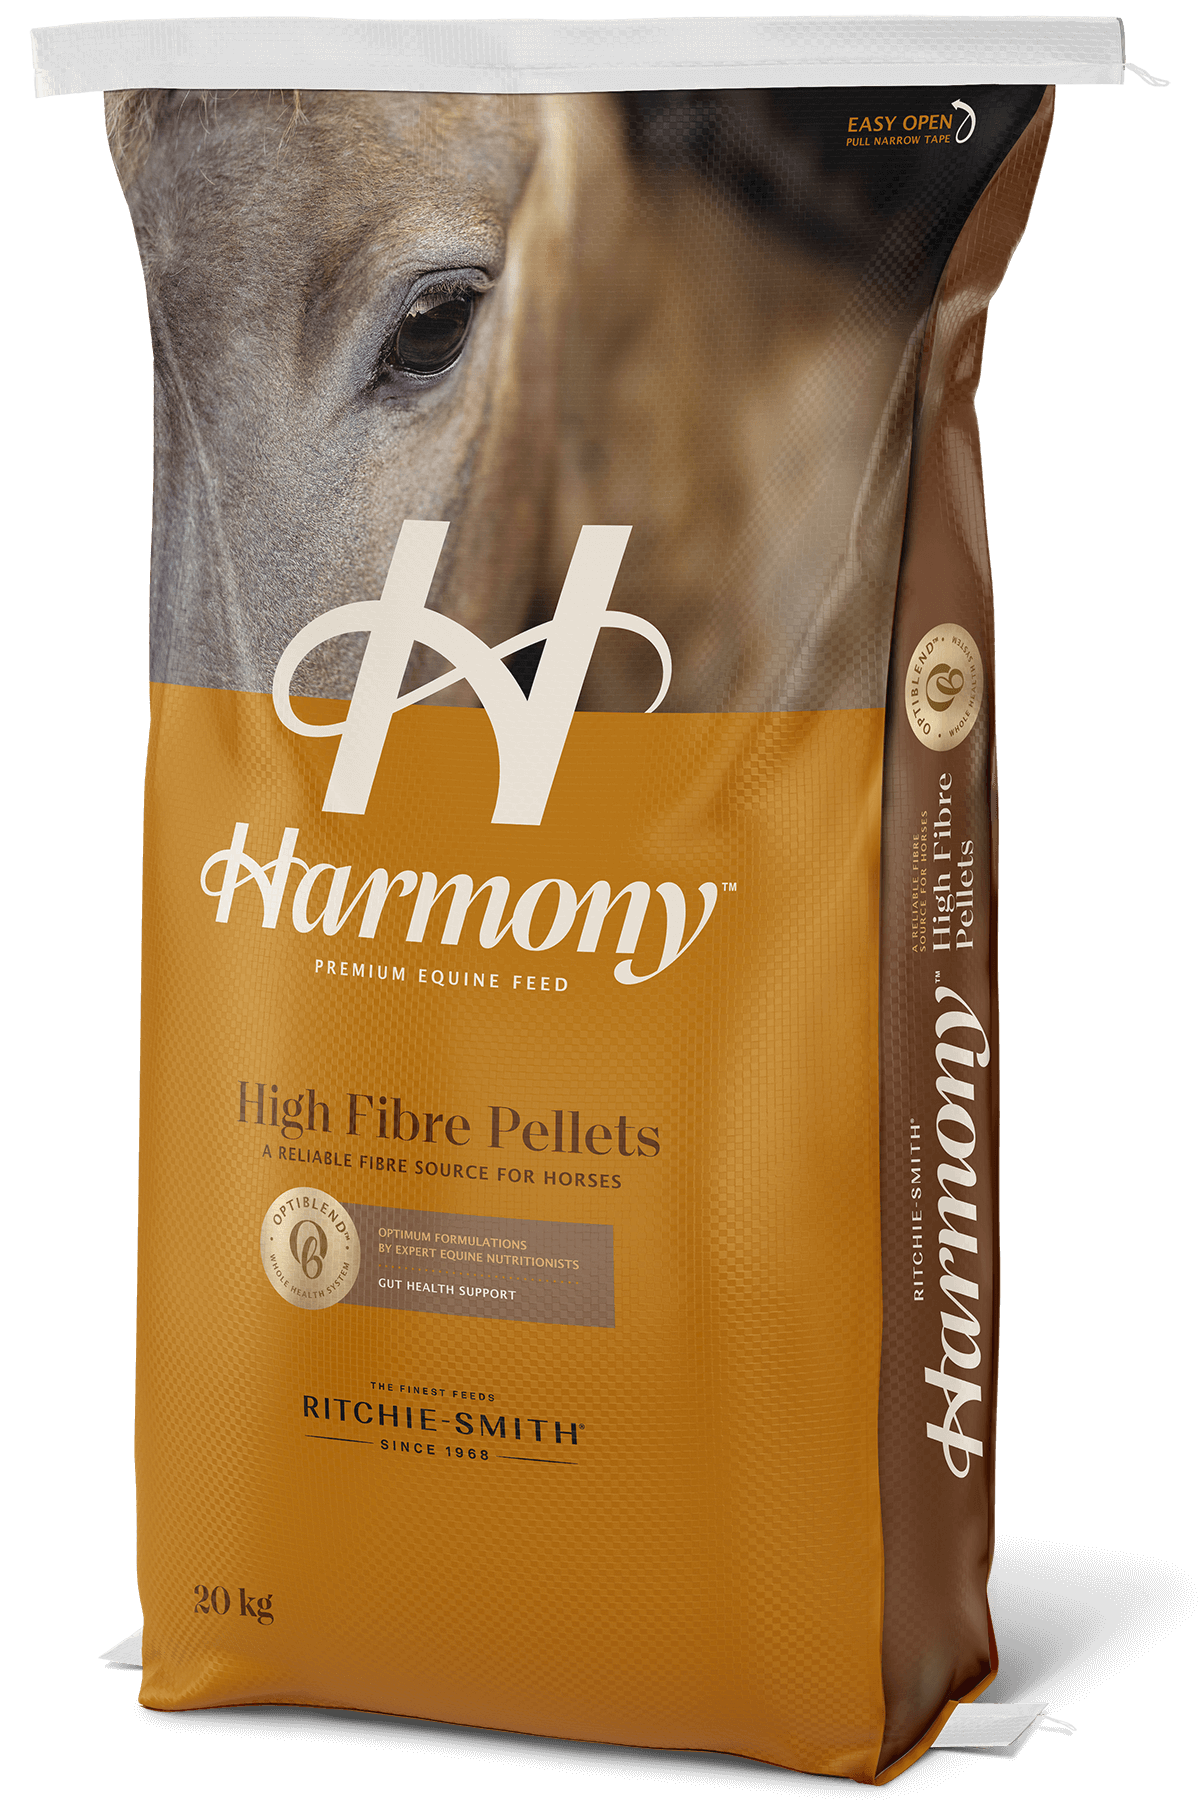 High Fibre Pellet by Harmony Premium Equine Feed